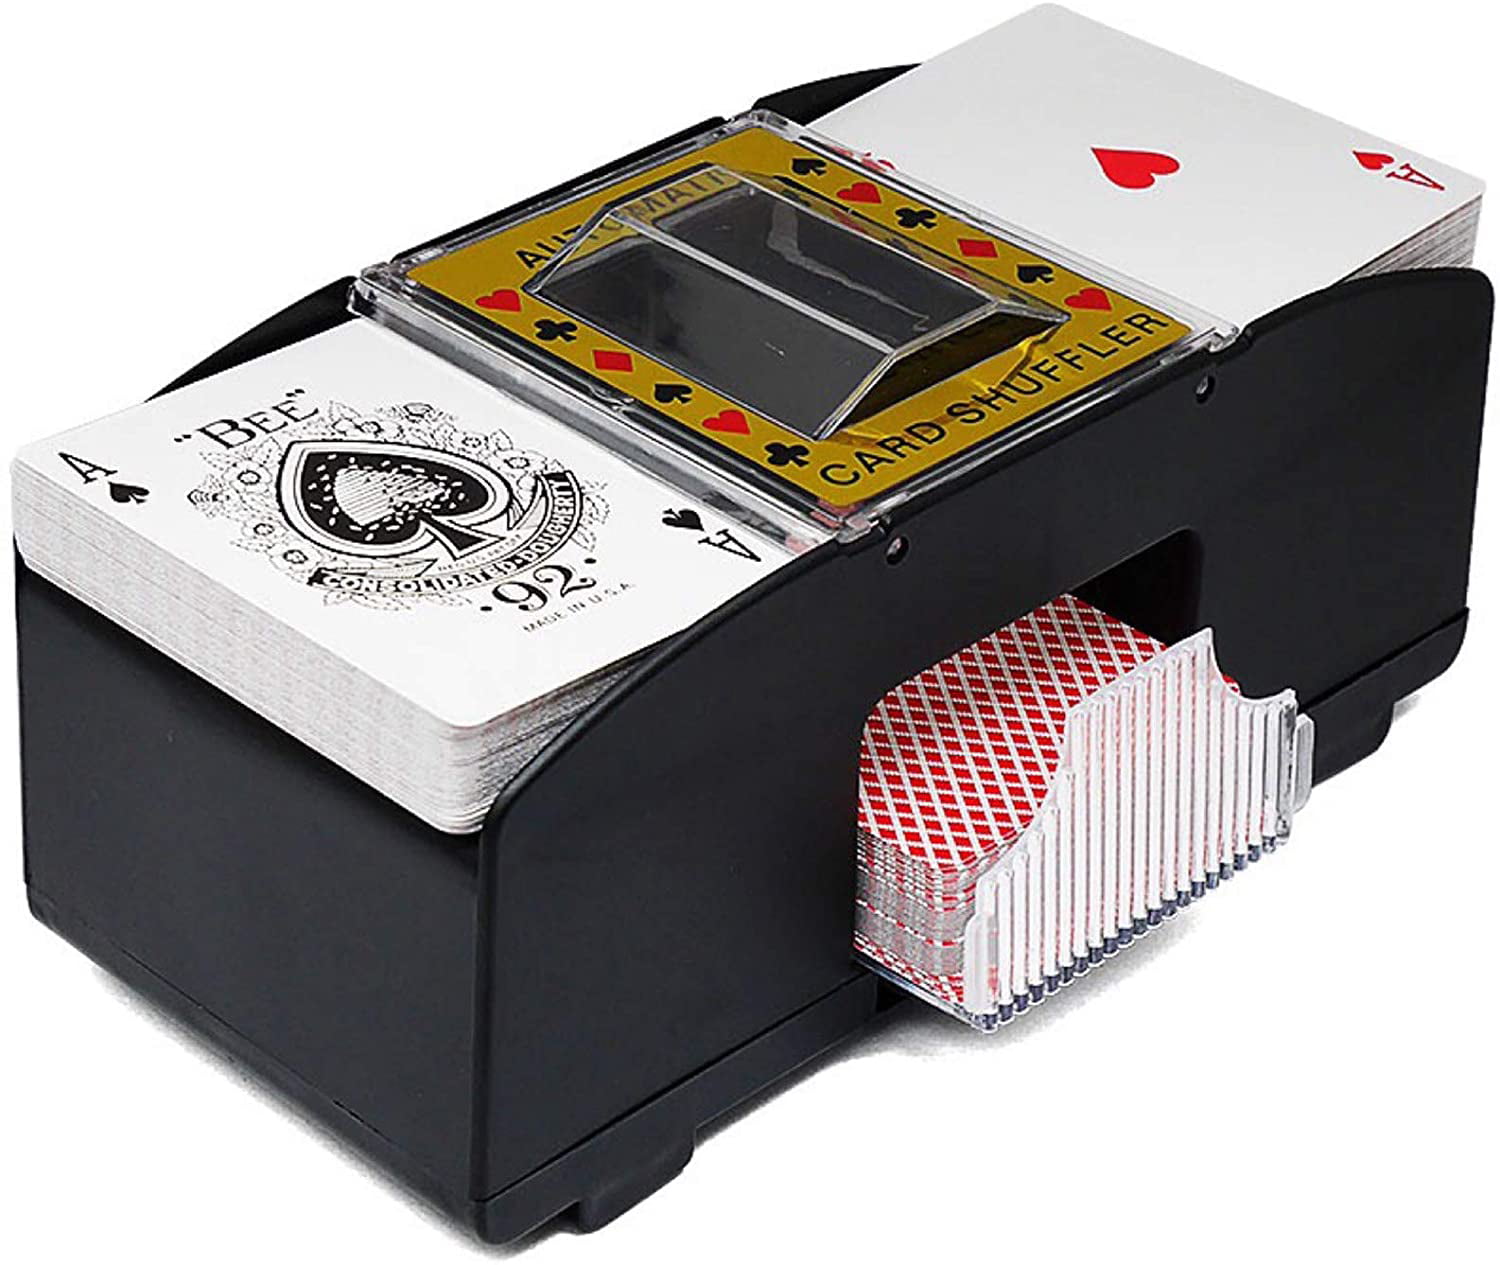 NEW AUTOMATIC PLAYING CARDS SHUFFLER POKER CASINO ONE/TWO DECK CARD SHUFFLE